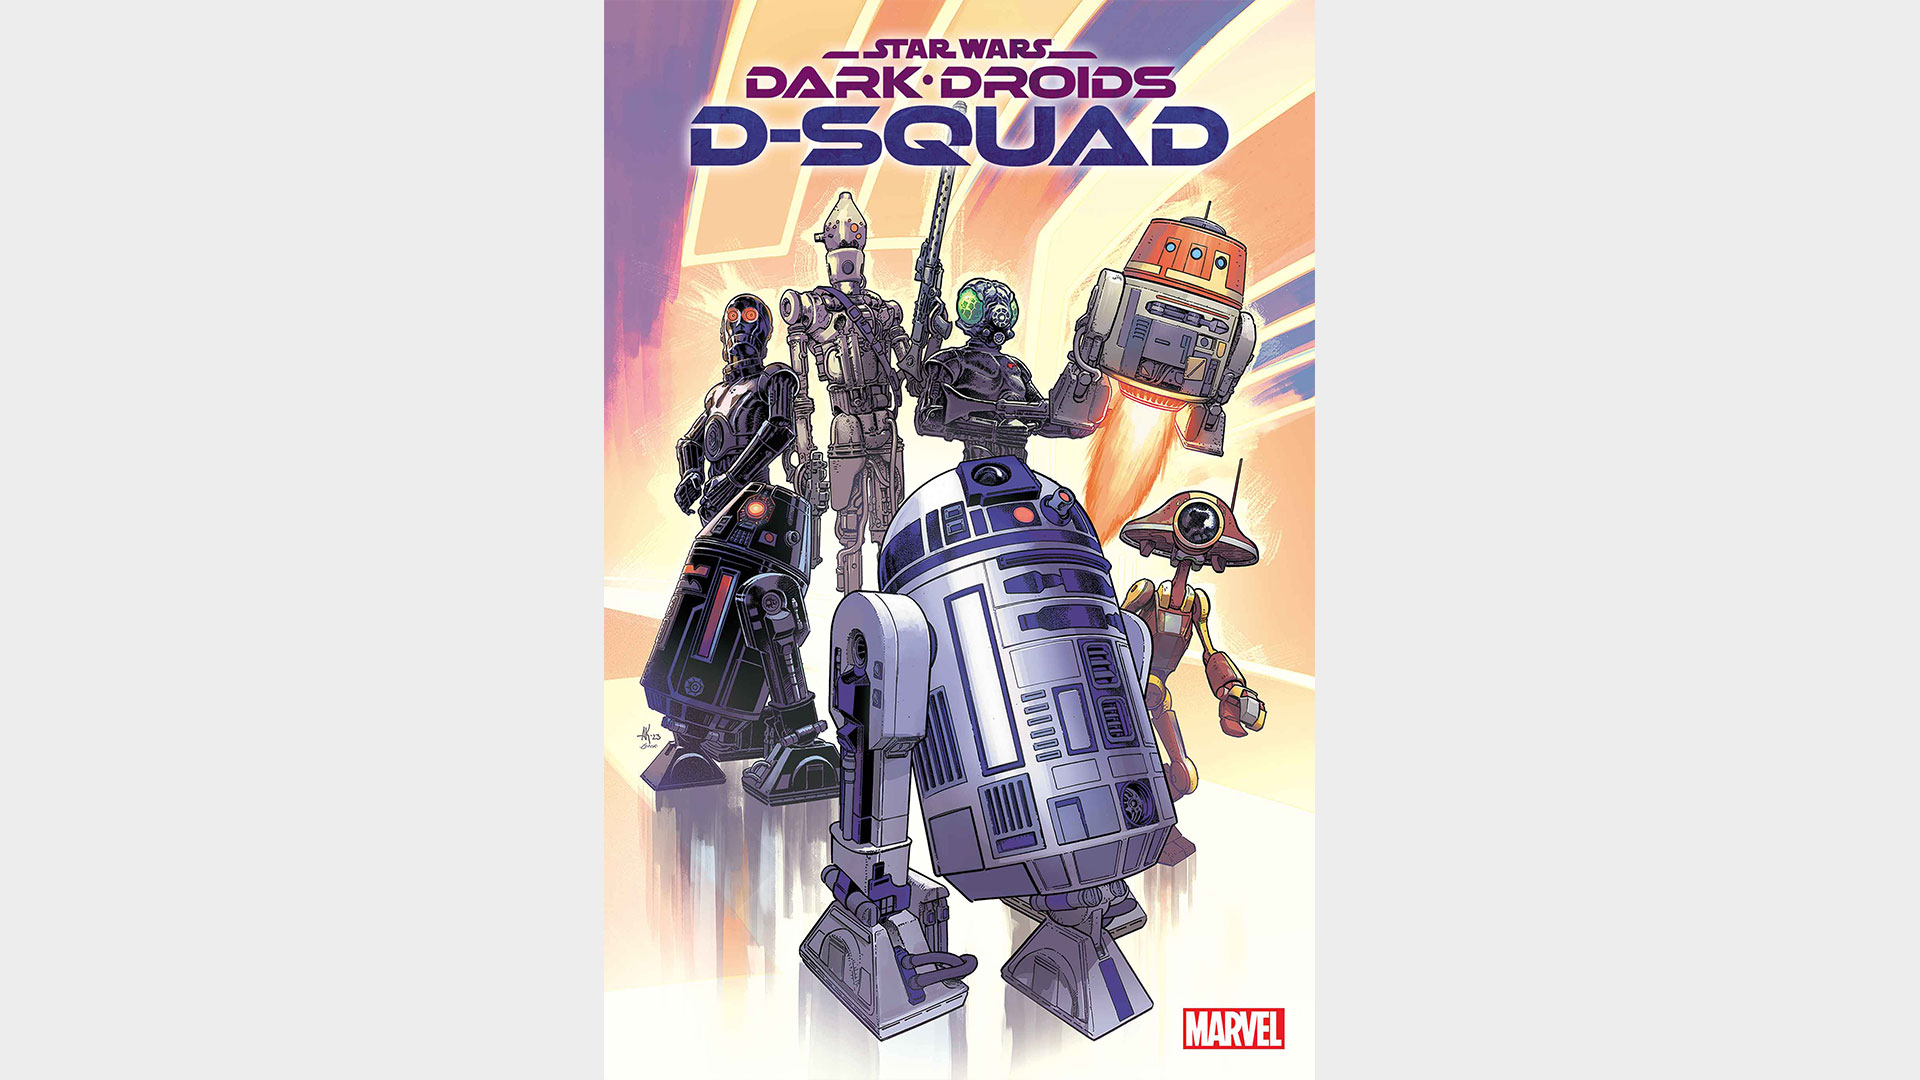 Star Wars Dark Droids D-Squad #1 cover